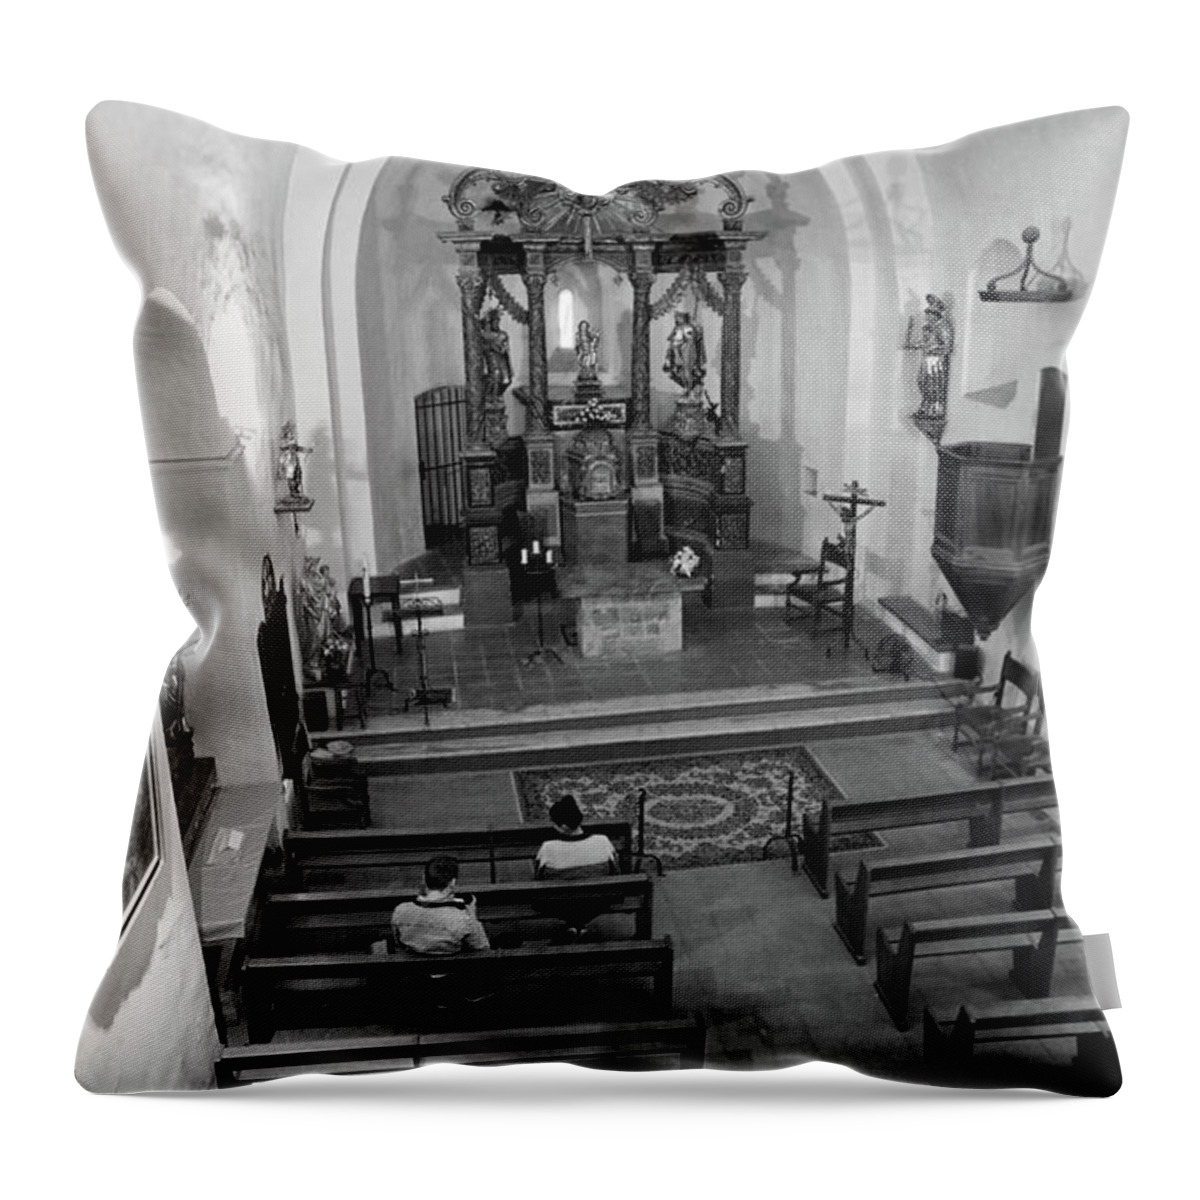 France Throw Pillow featuring the photograph Castelnou France Church Santa Maria by Chuck Kuhn